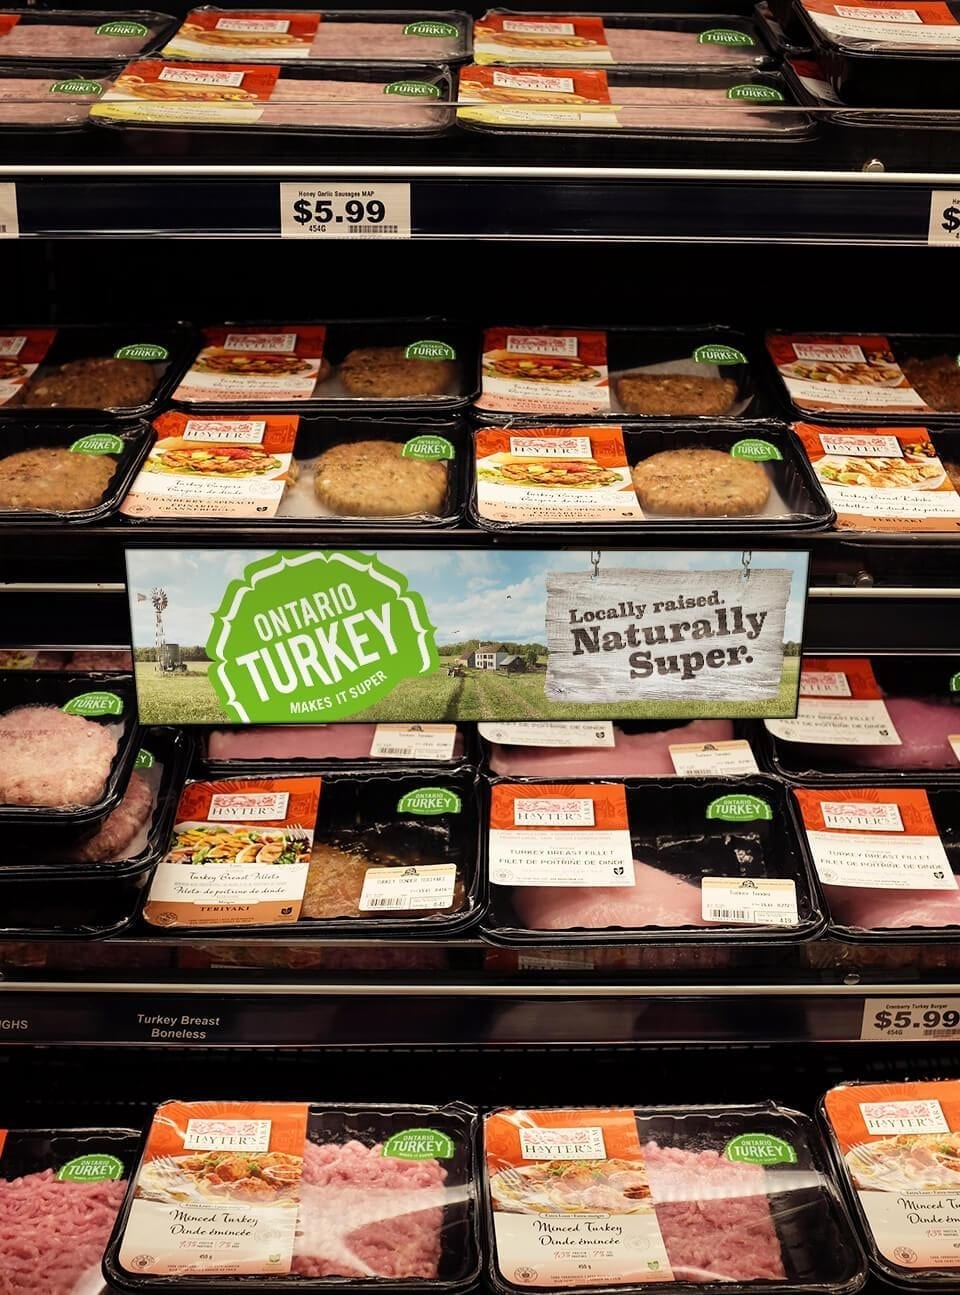 Ontario Turkey in-store shelf signage